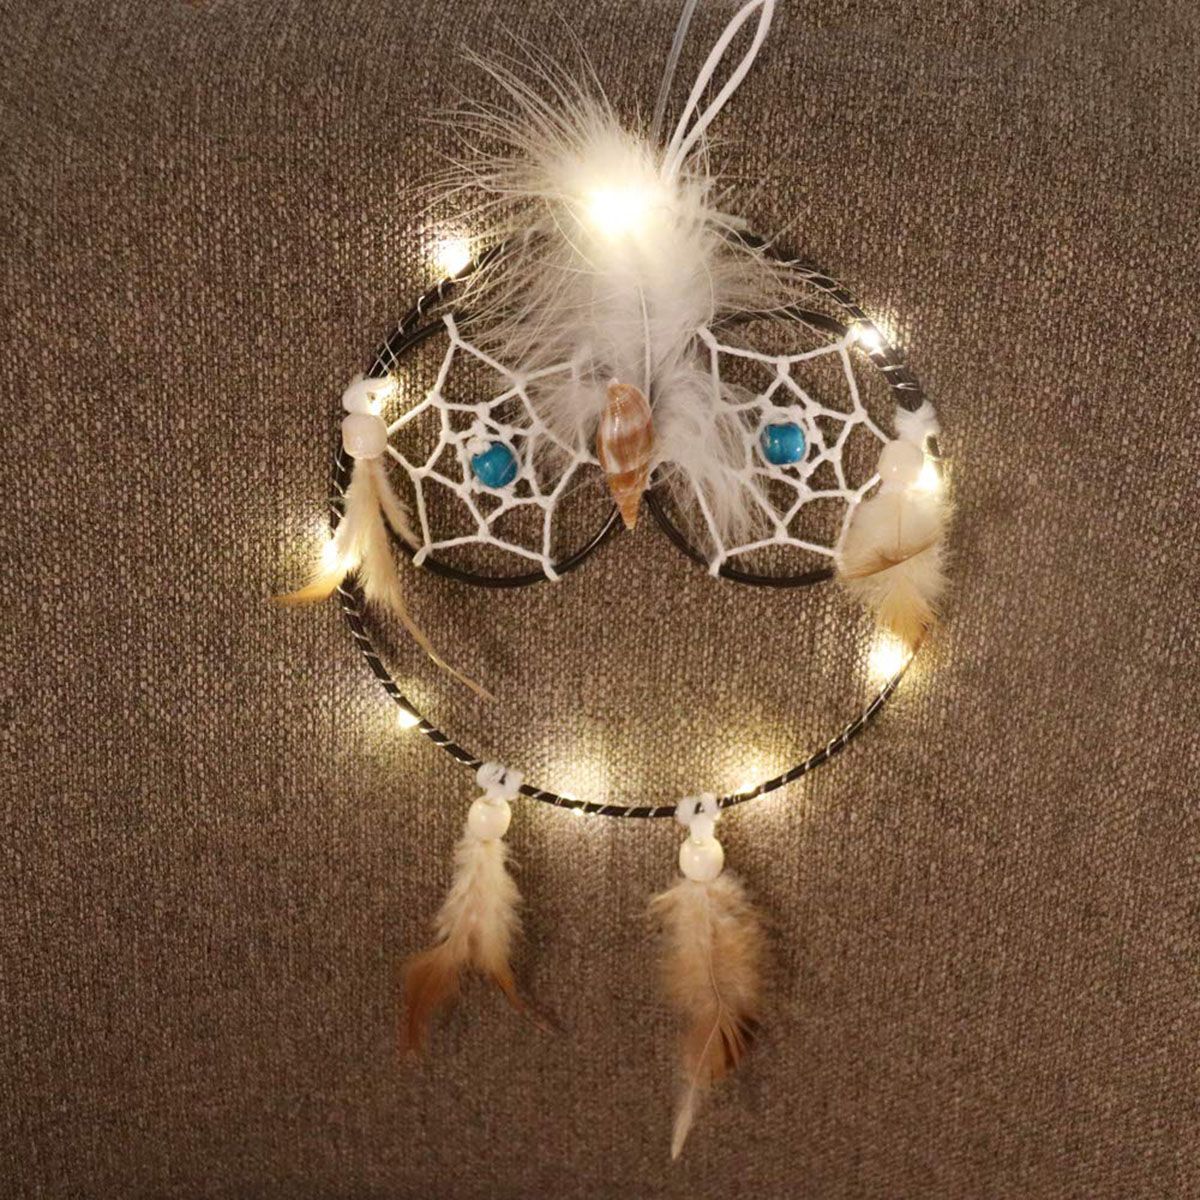 Owl-Shape-Luminous-Dream-Catcher-Dreamcatchers-Hanging-Wall-Living-Room-Ornament-Decorations-1540098